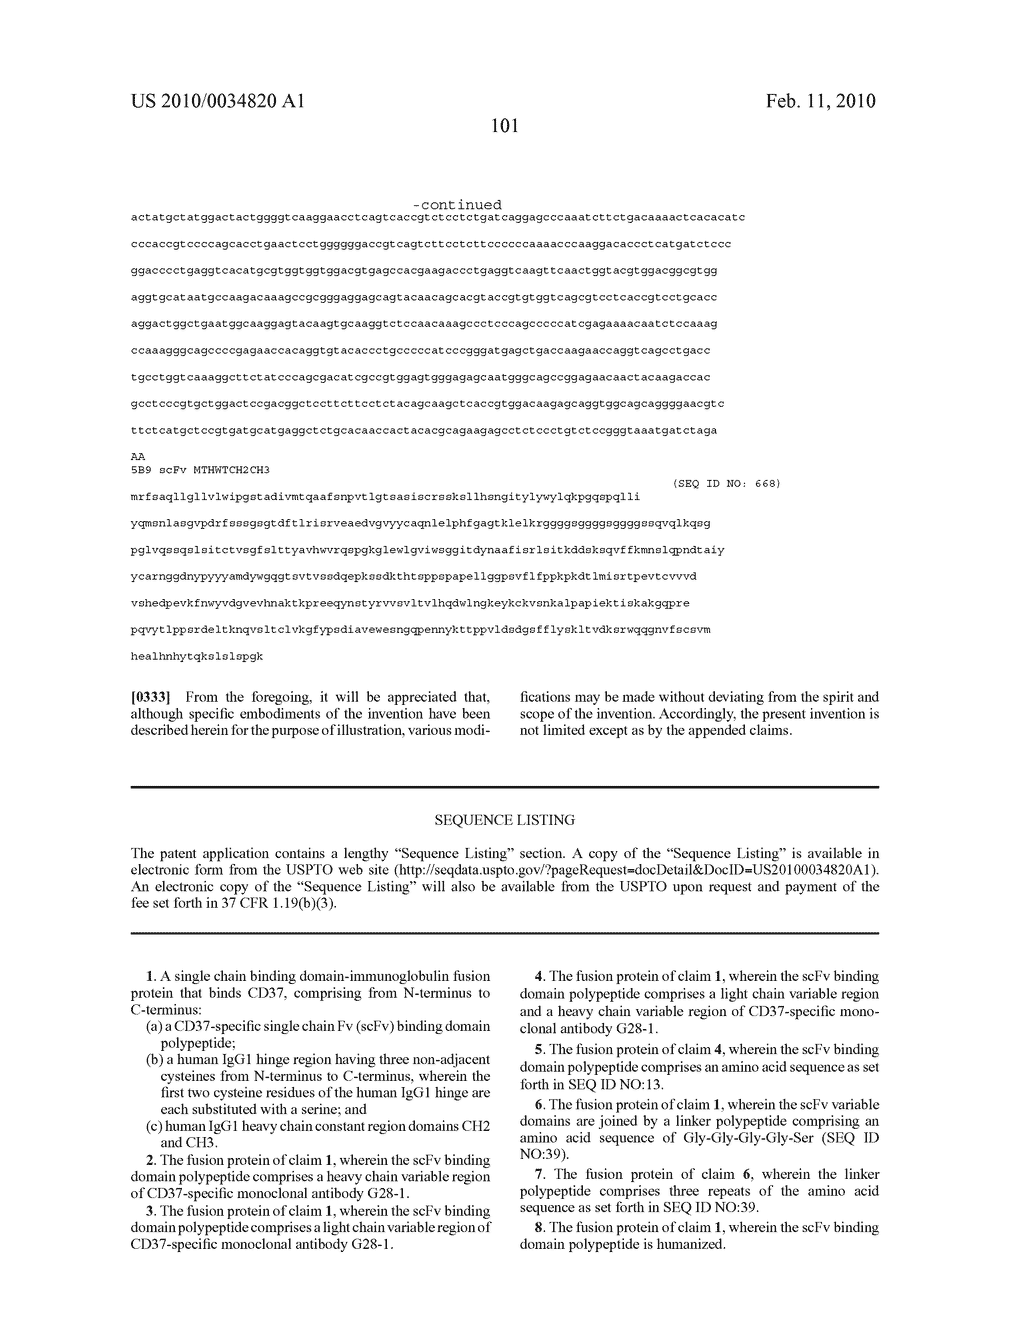 BINDING DOMAIN-IMMUNOGLOBULIN FUSION PROTEINS - diagram, schematic, and image 155